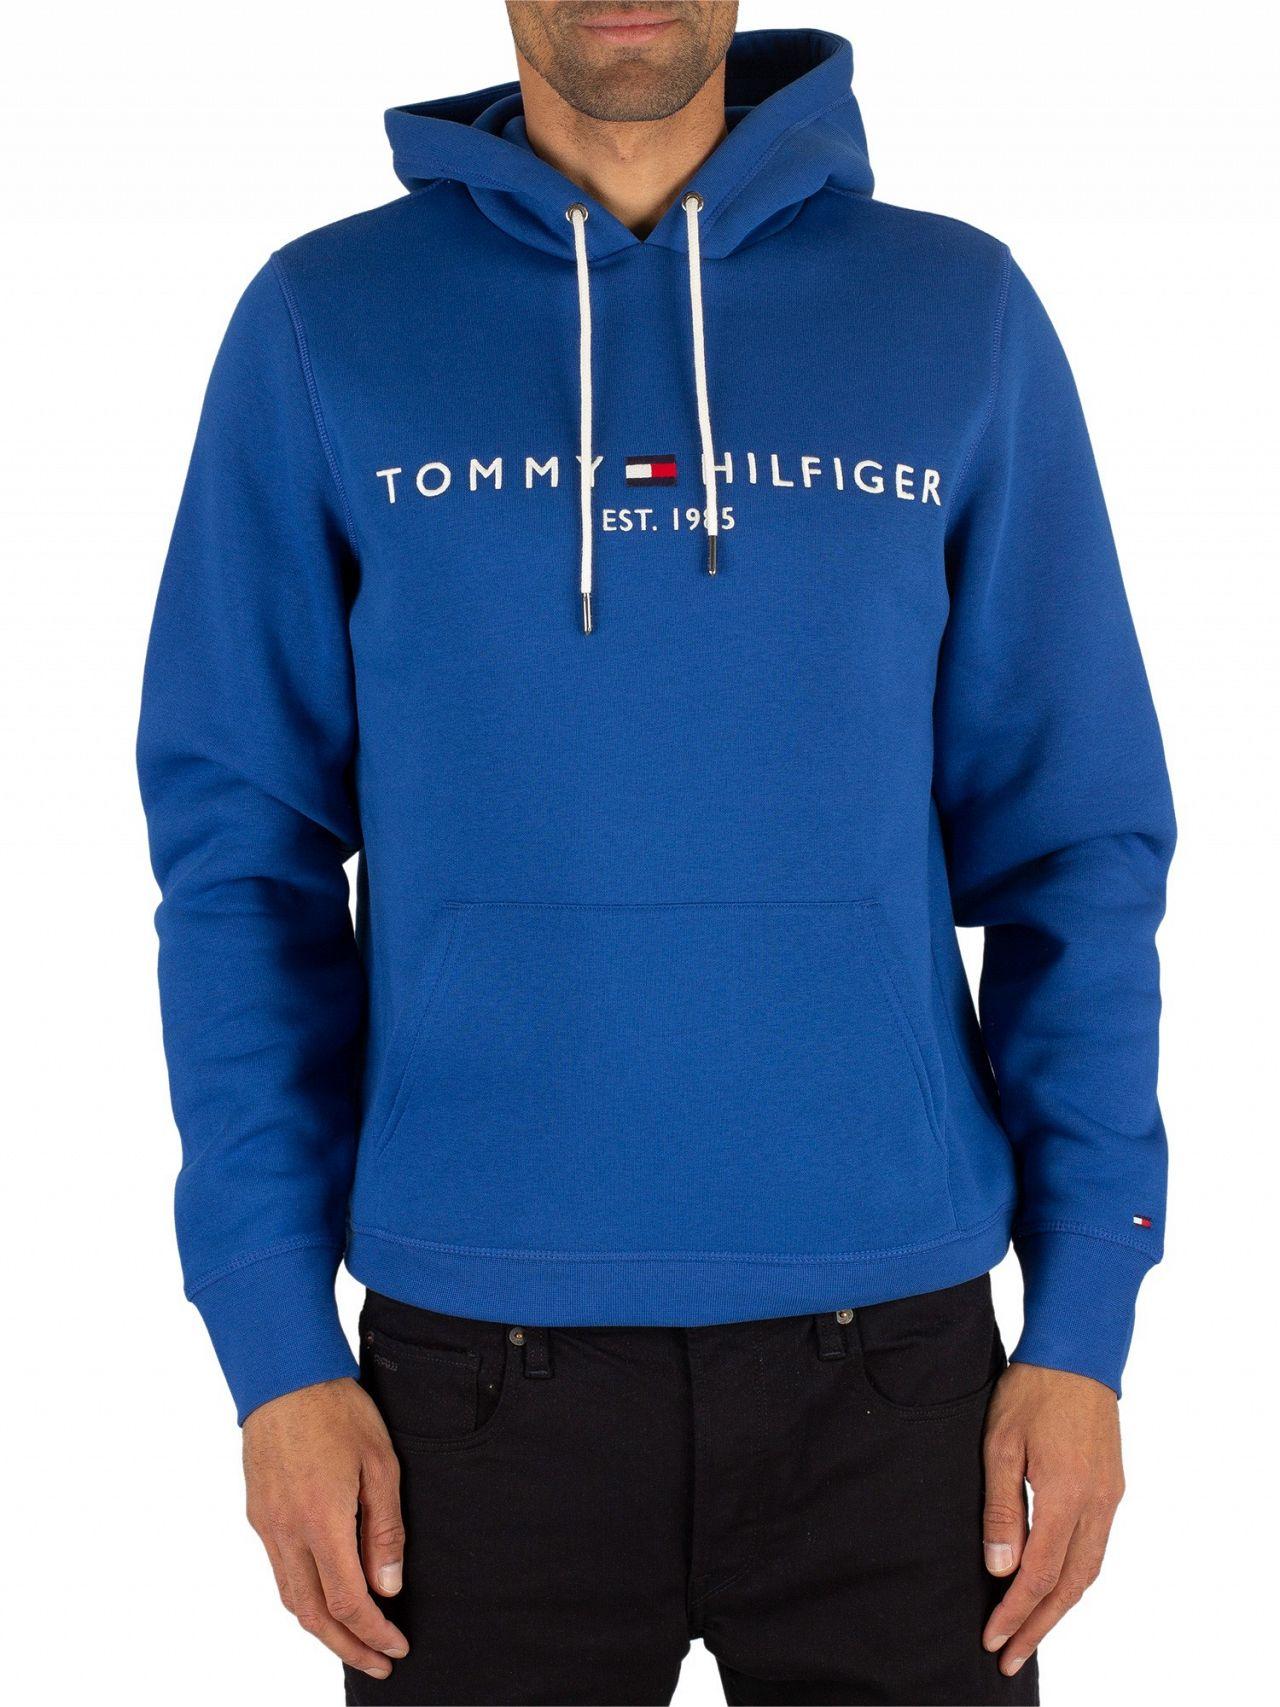 Tommy Hilfiger Blue Quartz Logo Pullover Hoodie in Blue for Men - Lyst